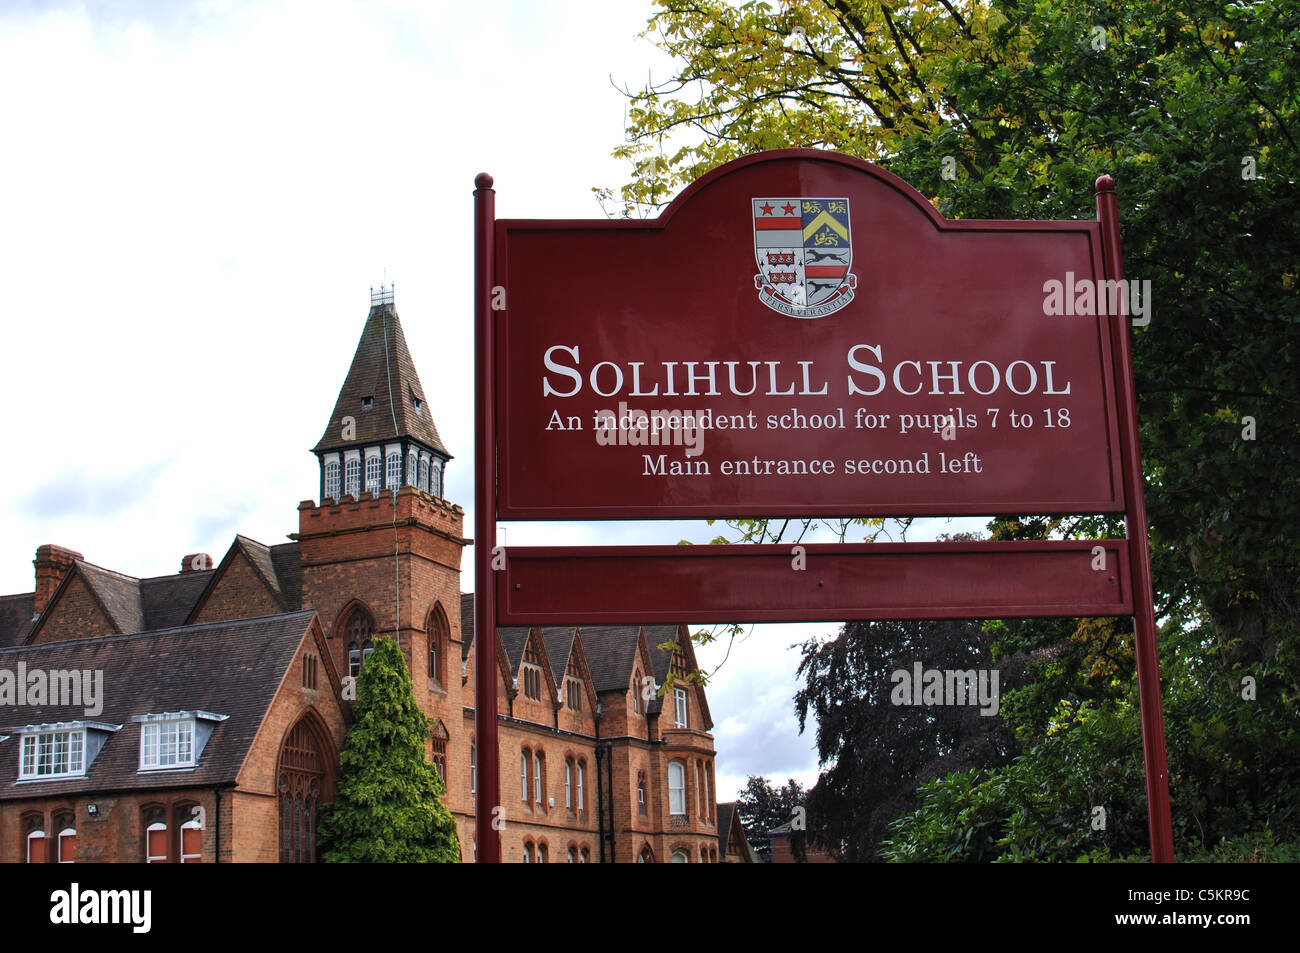 Solihull School, West Midlands, England, UK Banque D'Images